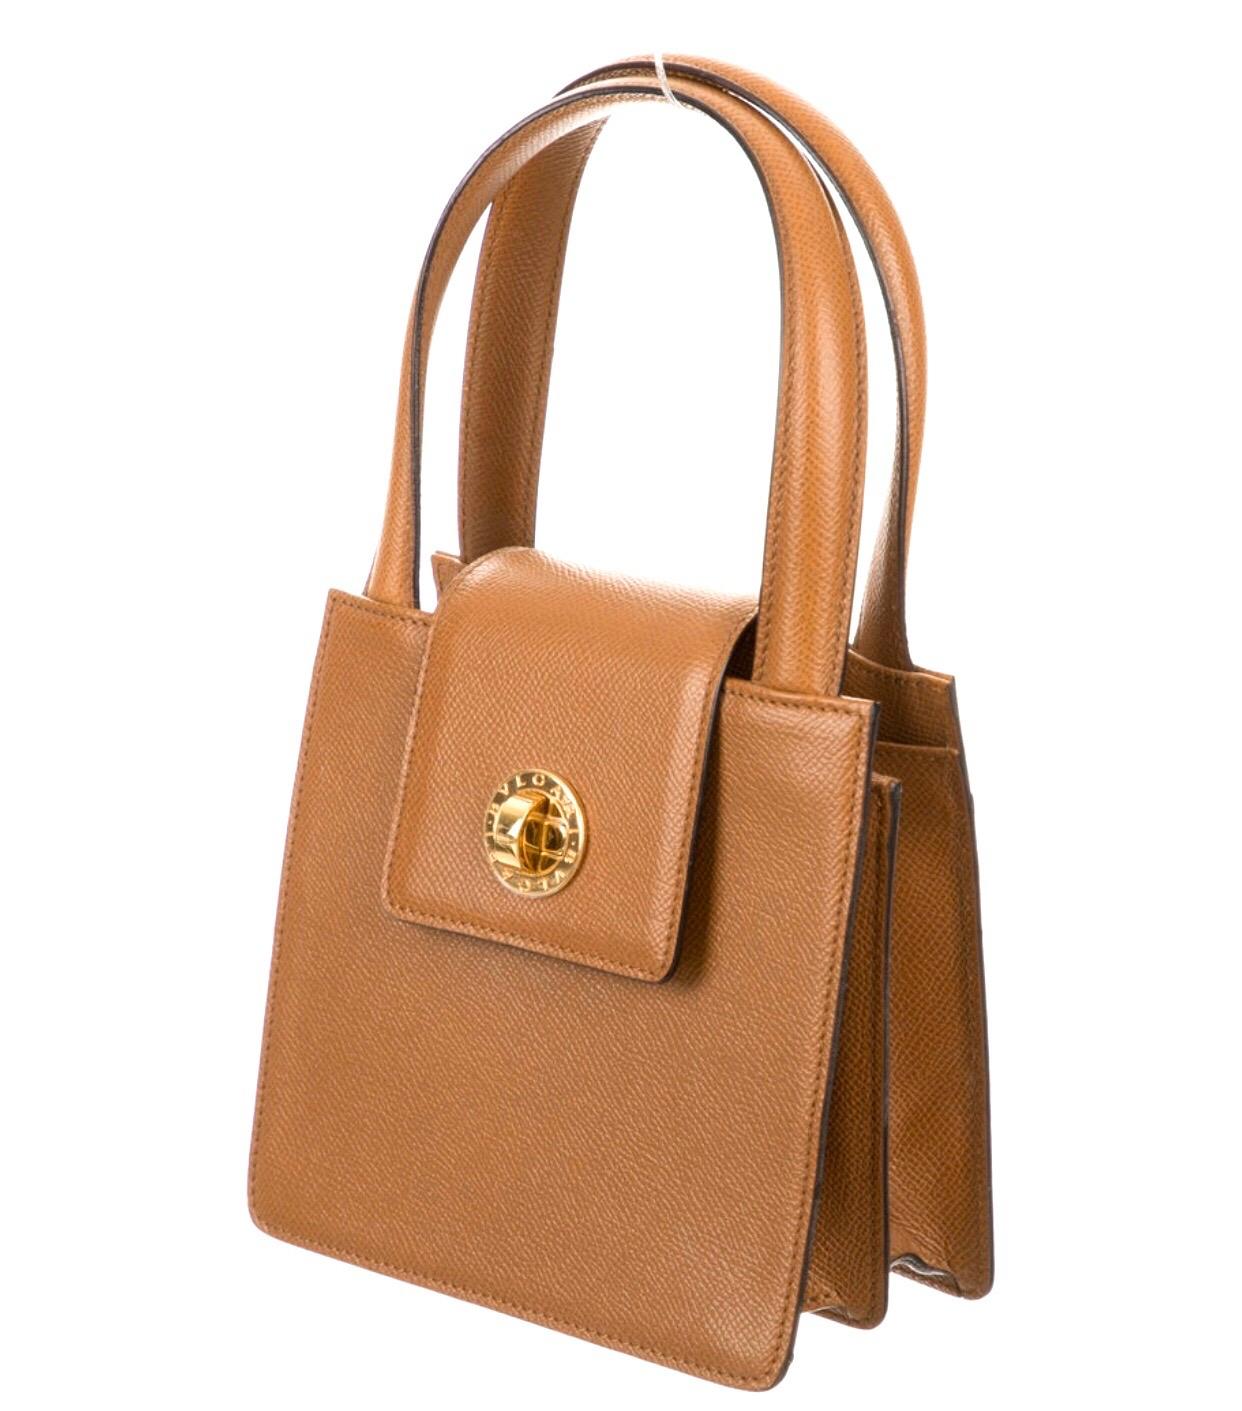 Bvlgari Brian leather mini handbag. Double handles, turn lock closure. Condition: excellent 